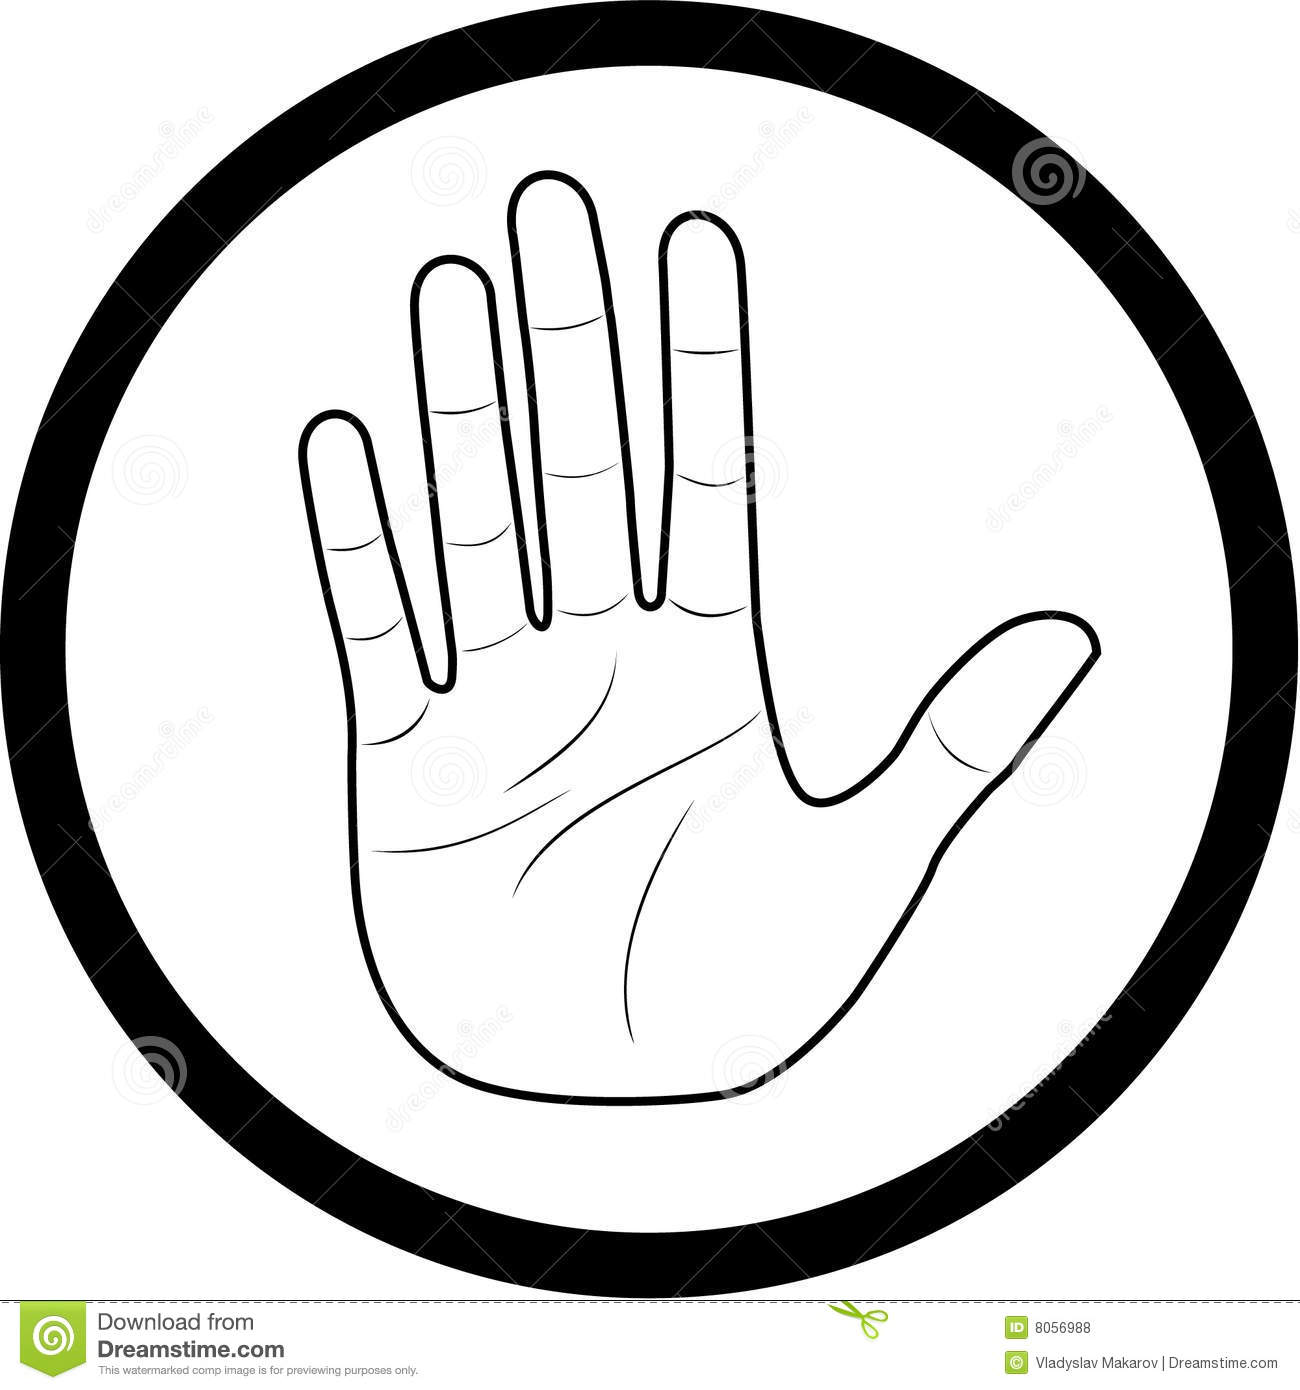 Hand Icon Vector Free